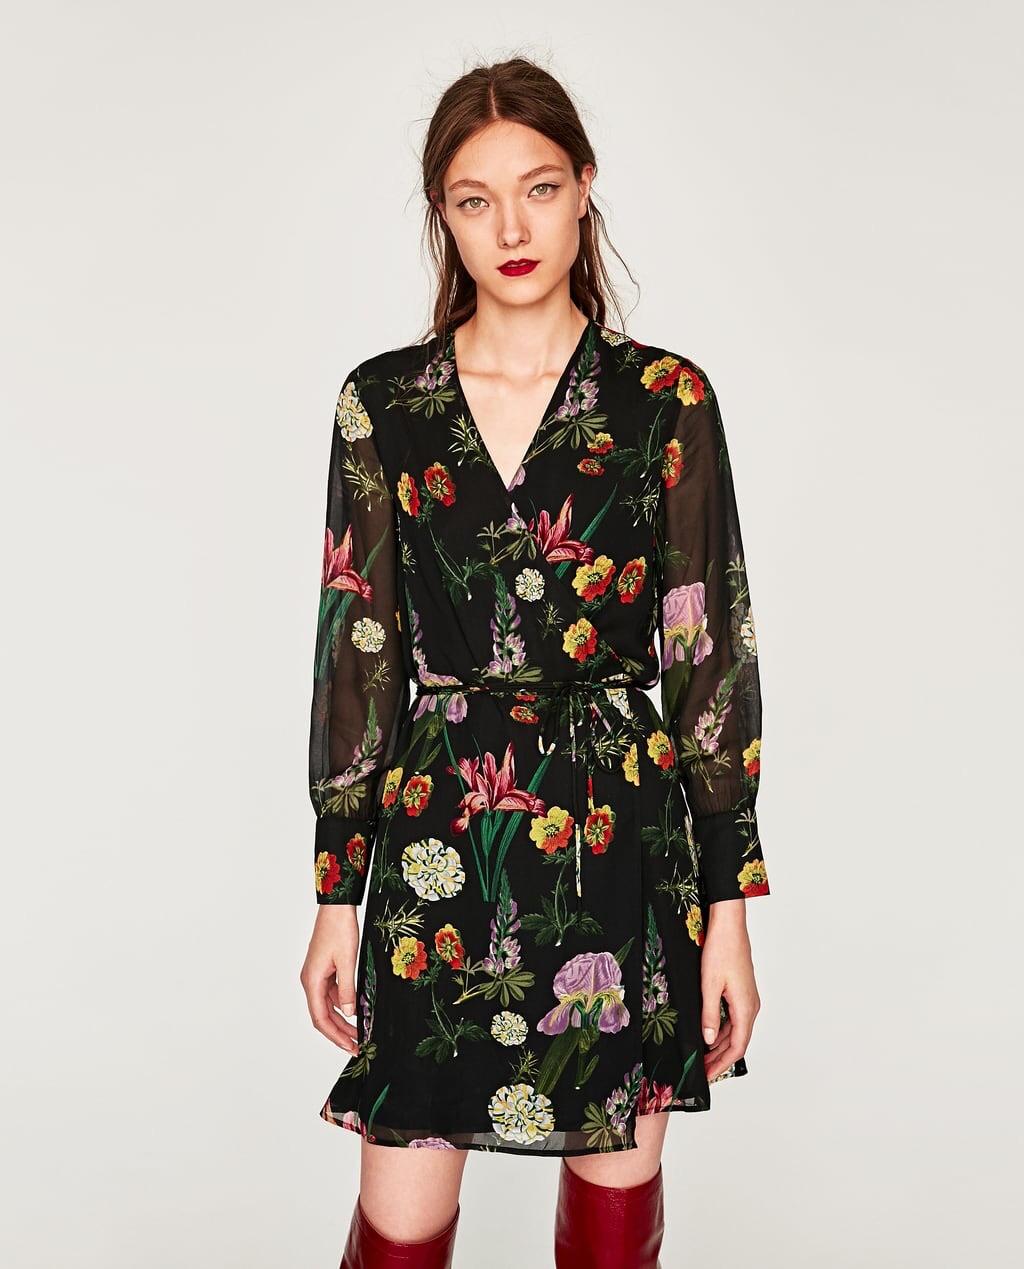 Zara floral wrap dress in LS4 Leeds for £30.00 for sale | Shpock